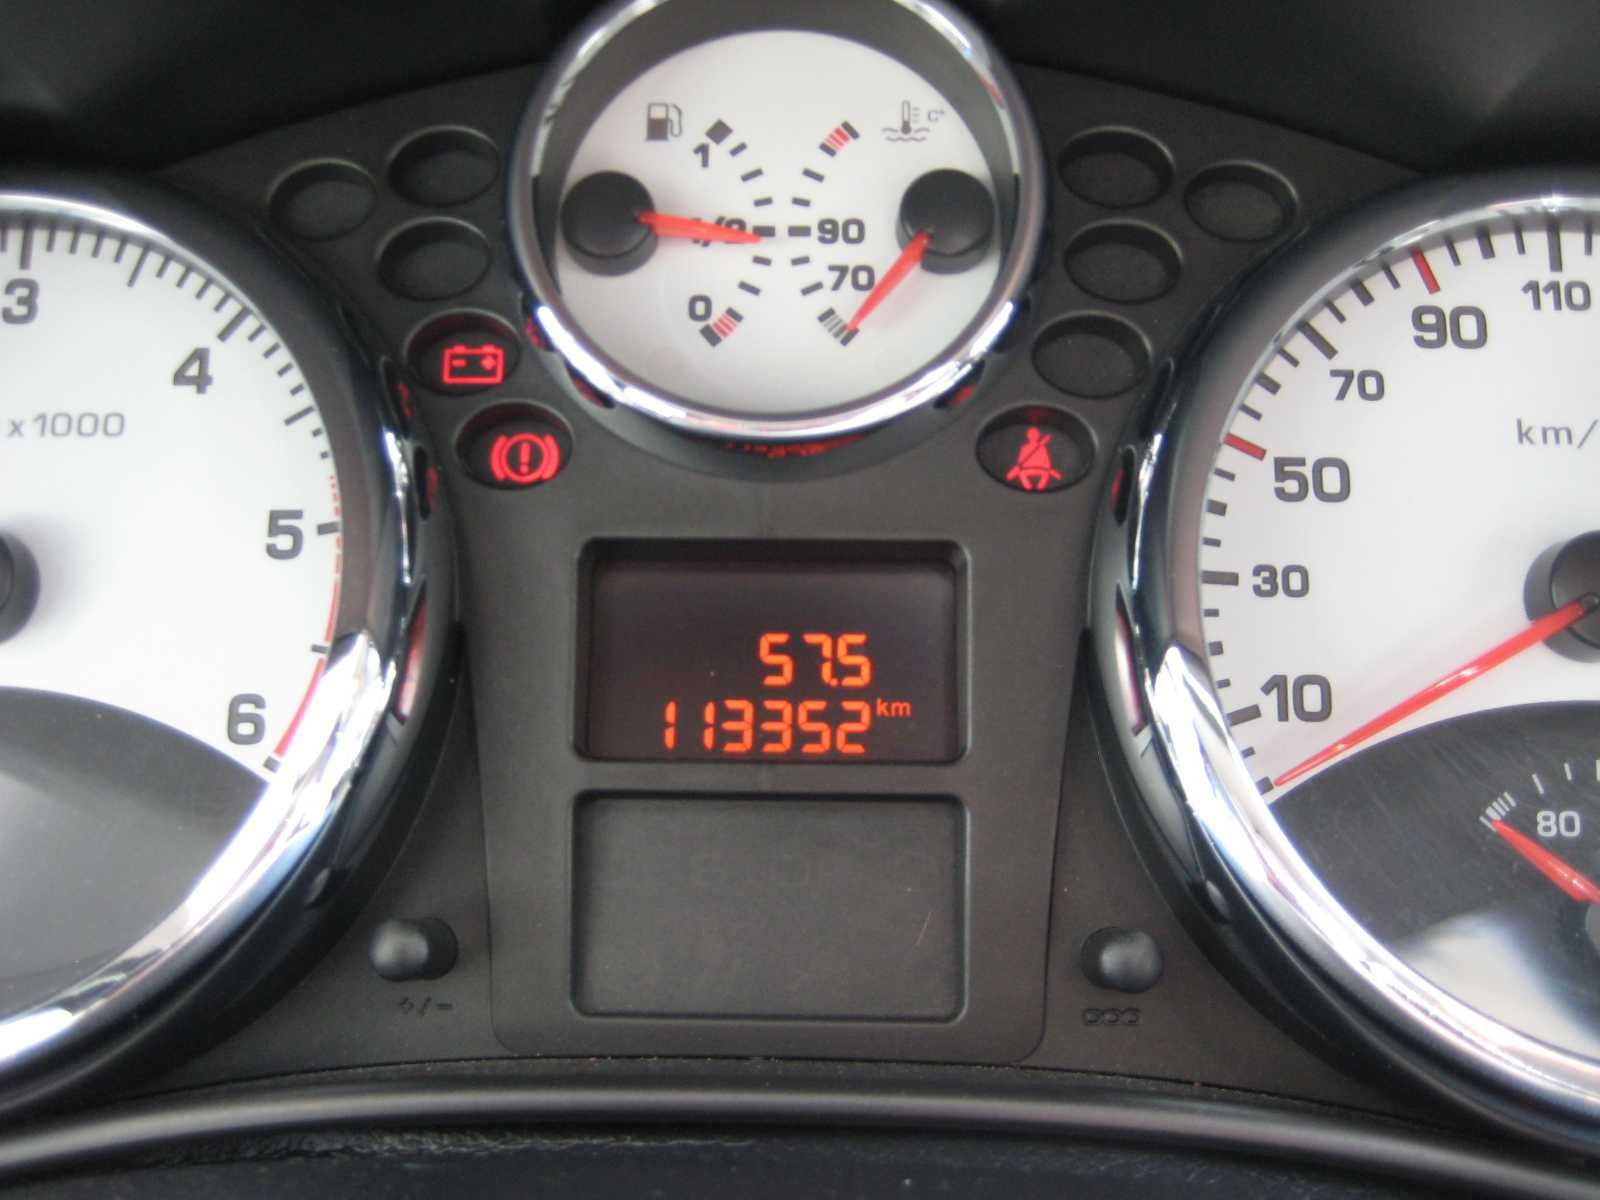 Peugeot 207 comecial 1.6 hdi com 113000 km reais